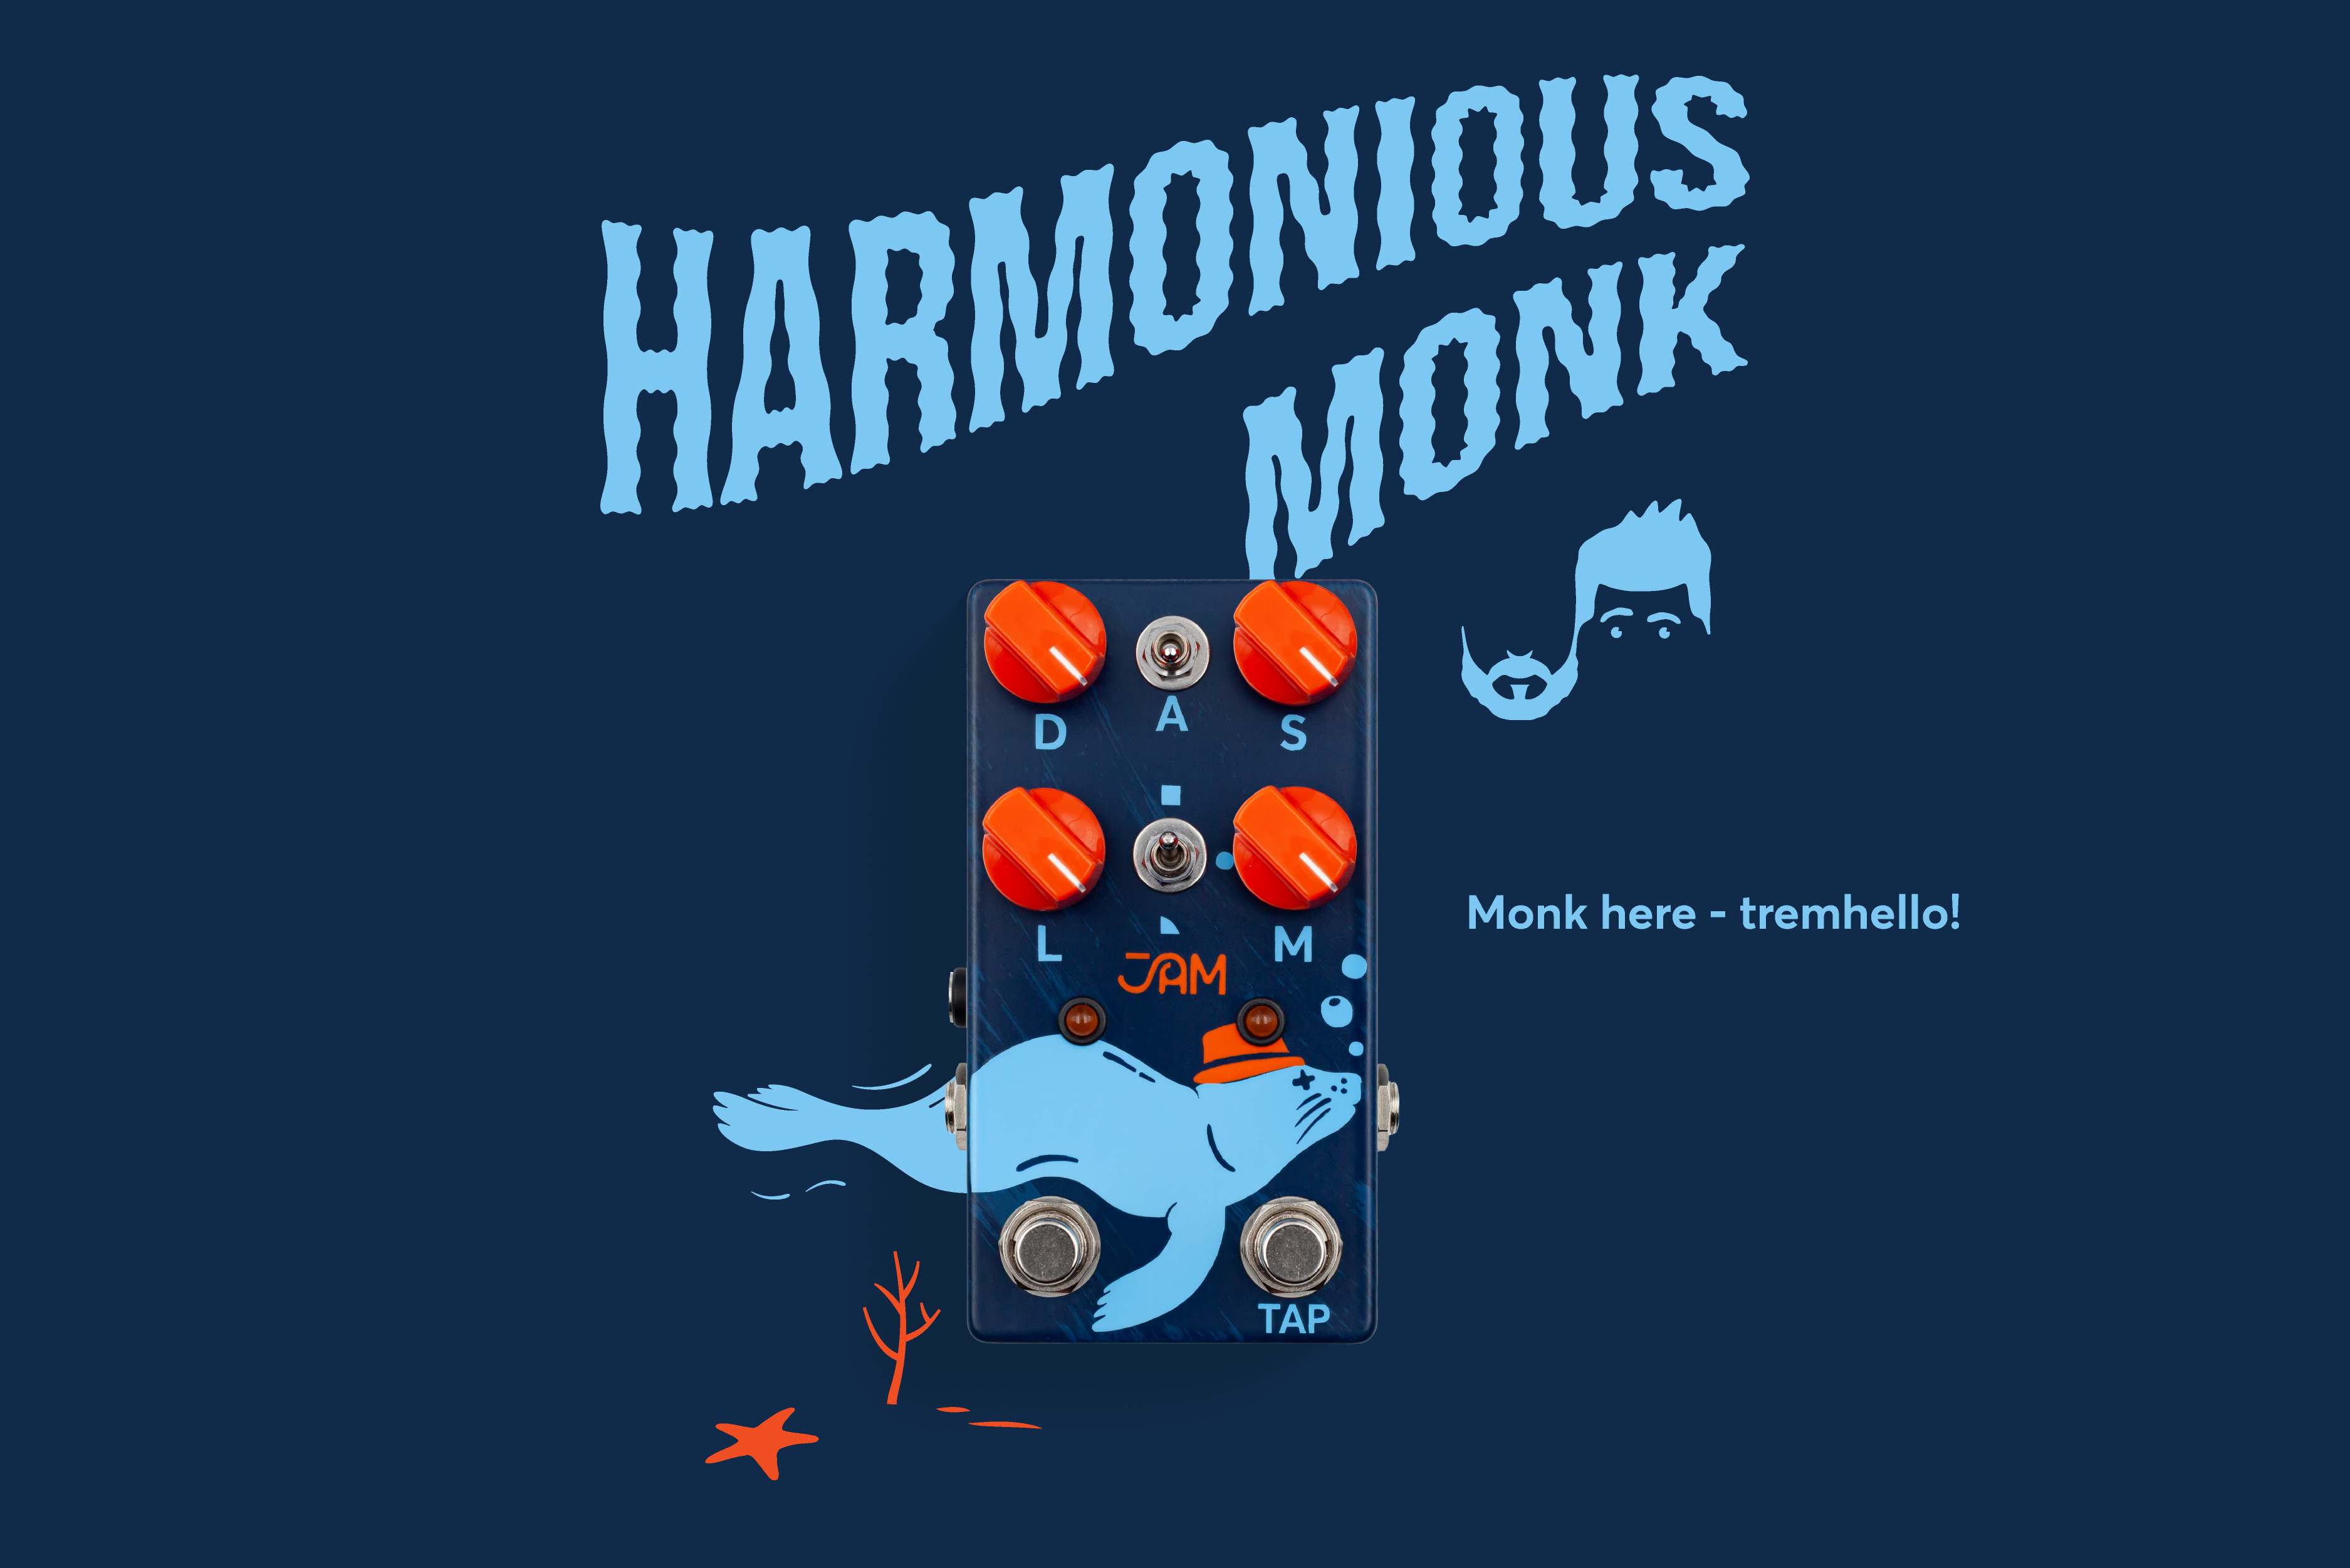 Harmonious Monk mk.2